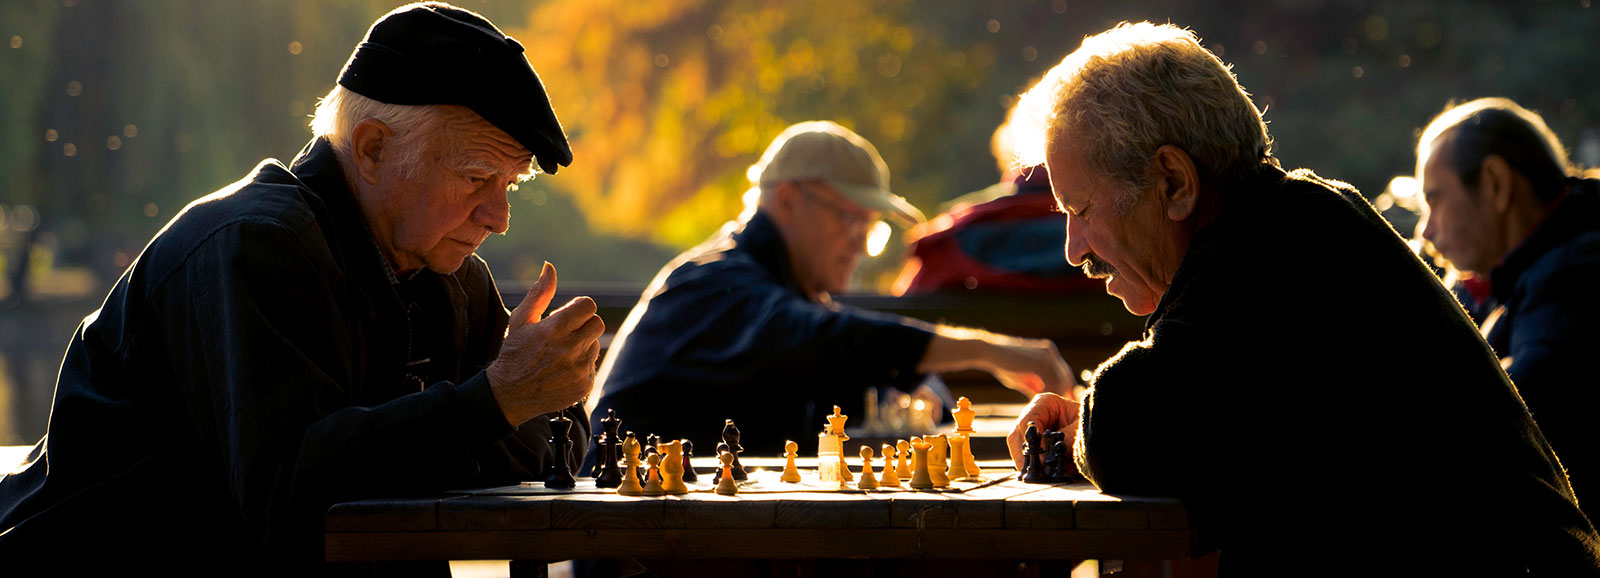 hommes âgés jouant aux échecs en plein air